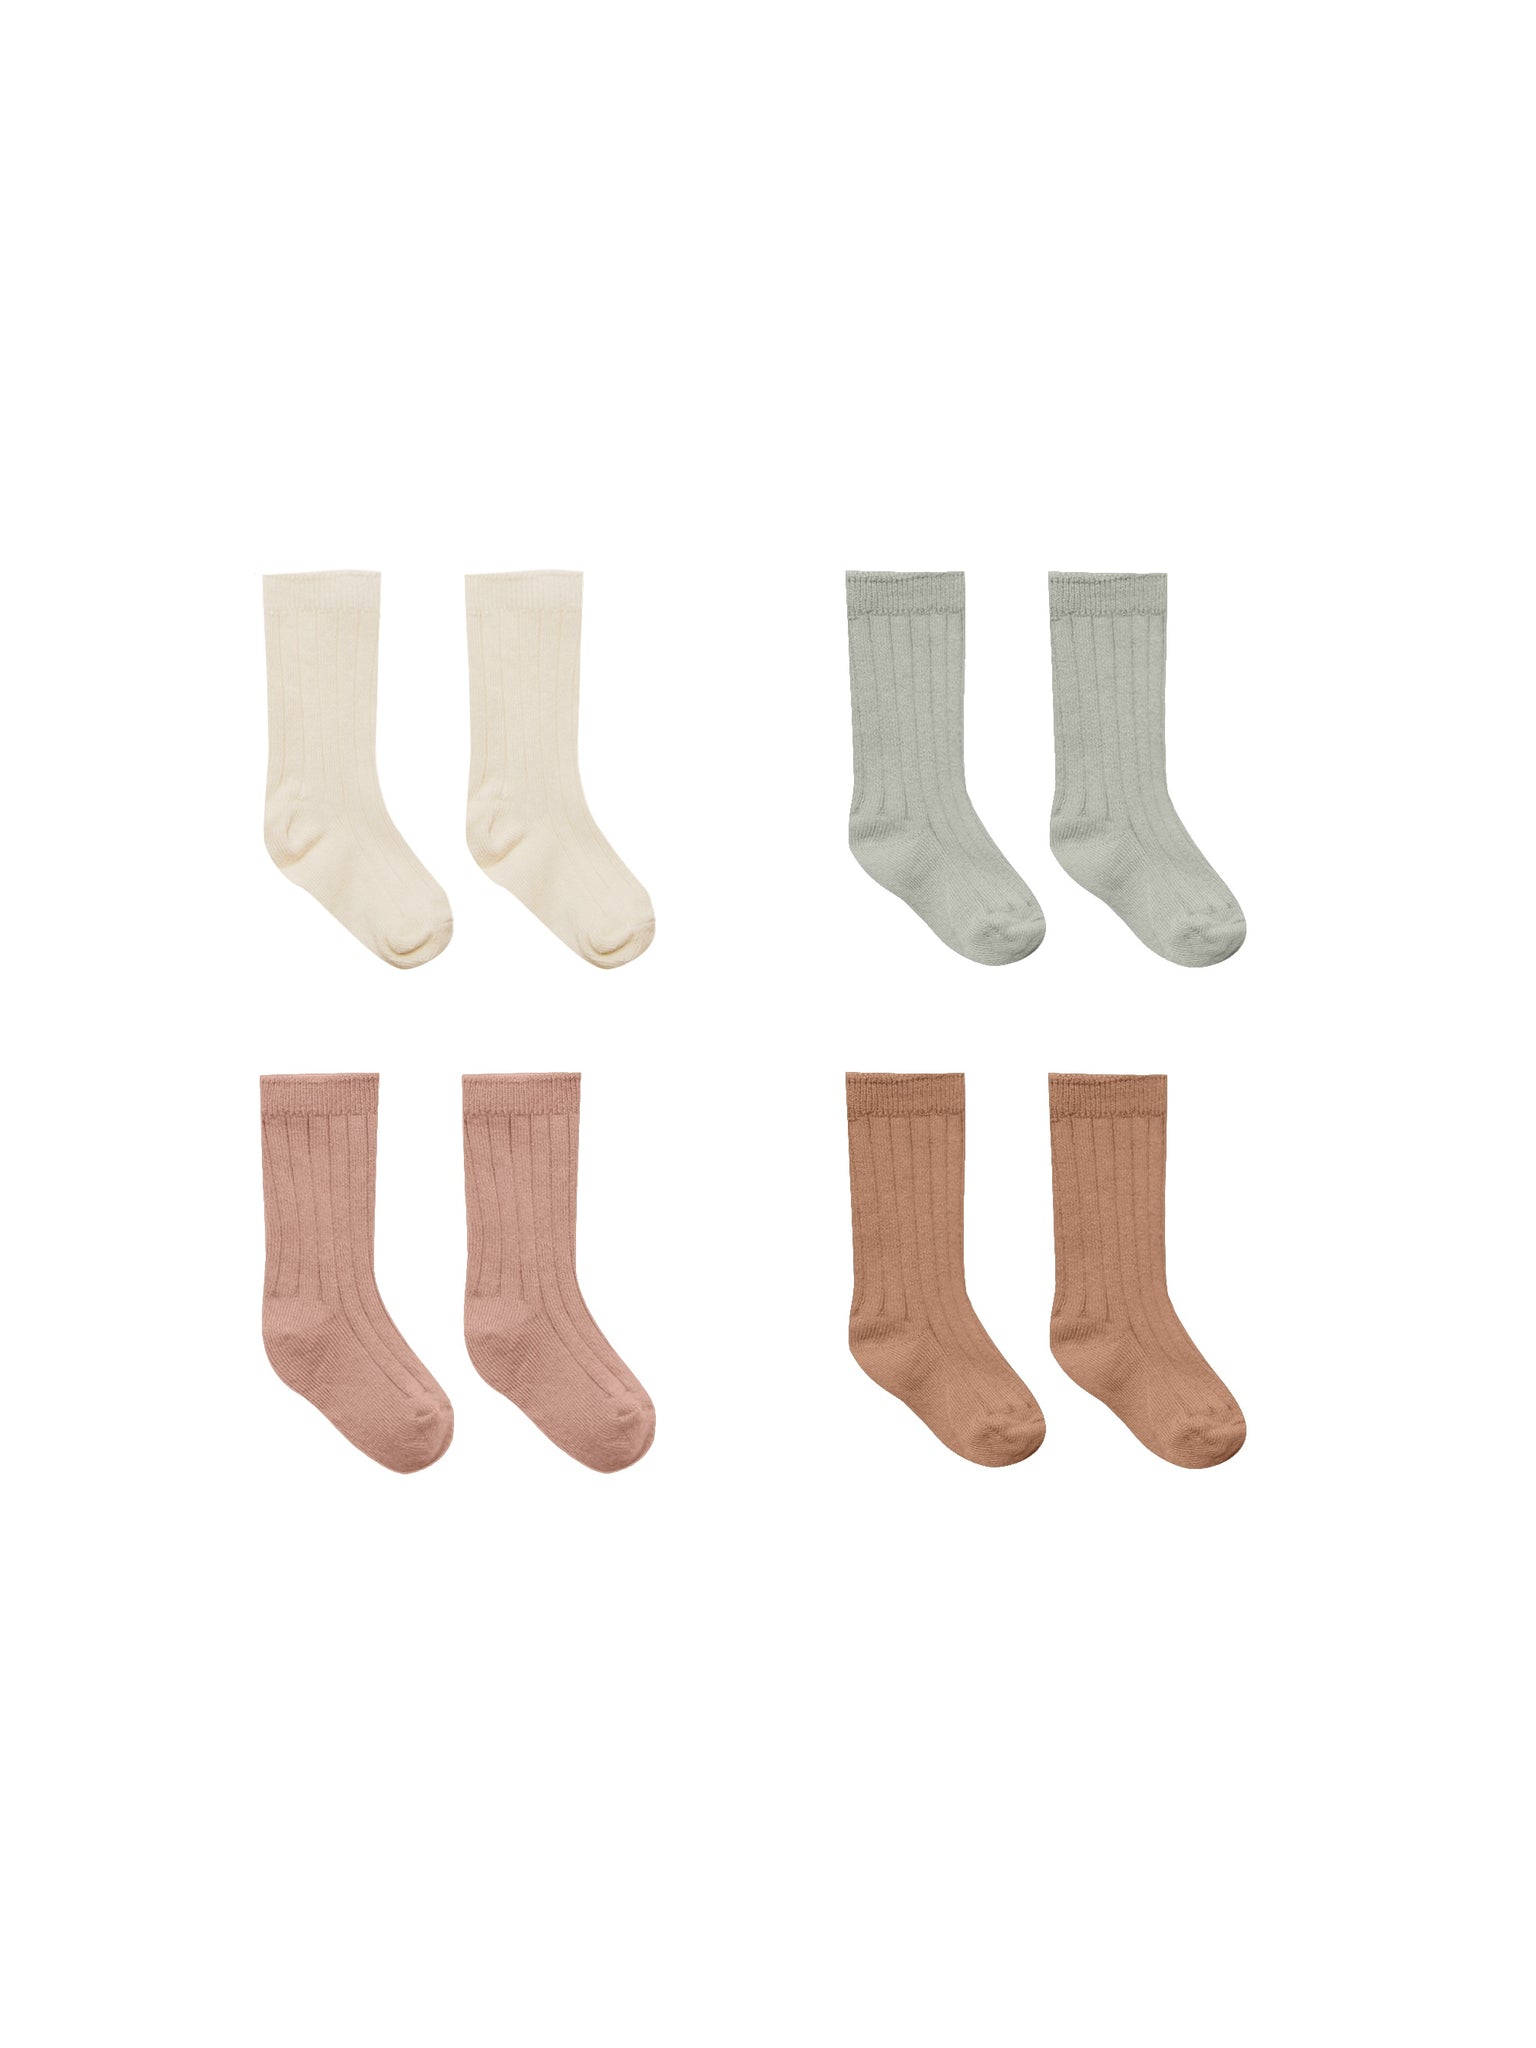 Quincy Mae Socks 4pk - Ivory/Pistachio/Lilac/Clay